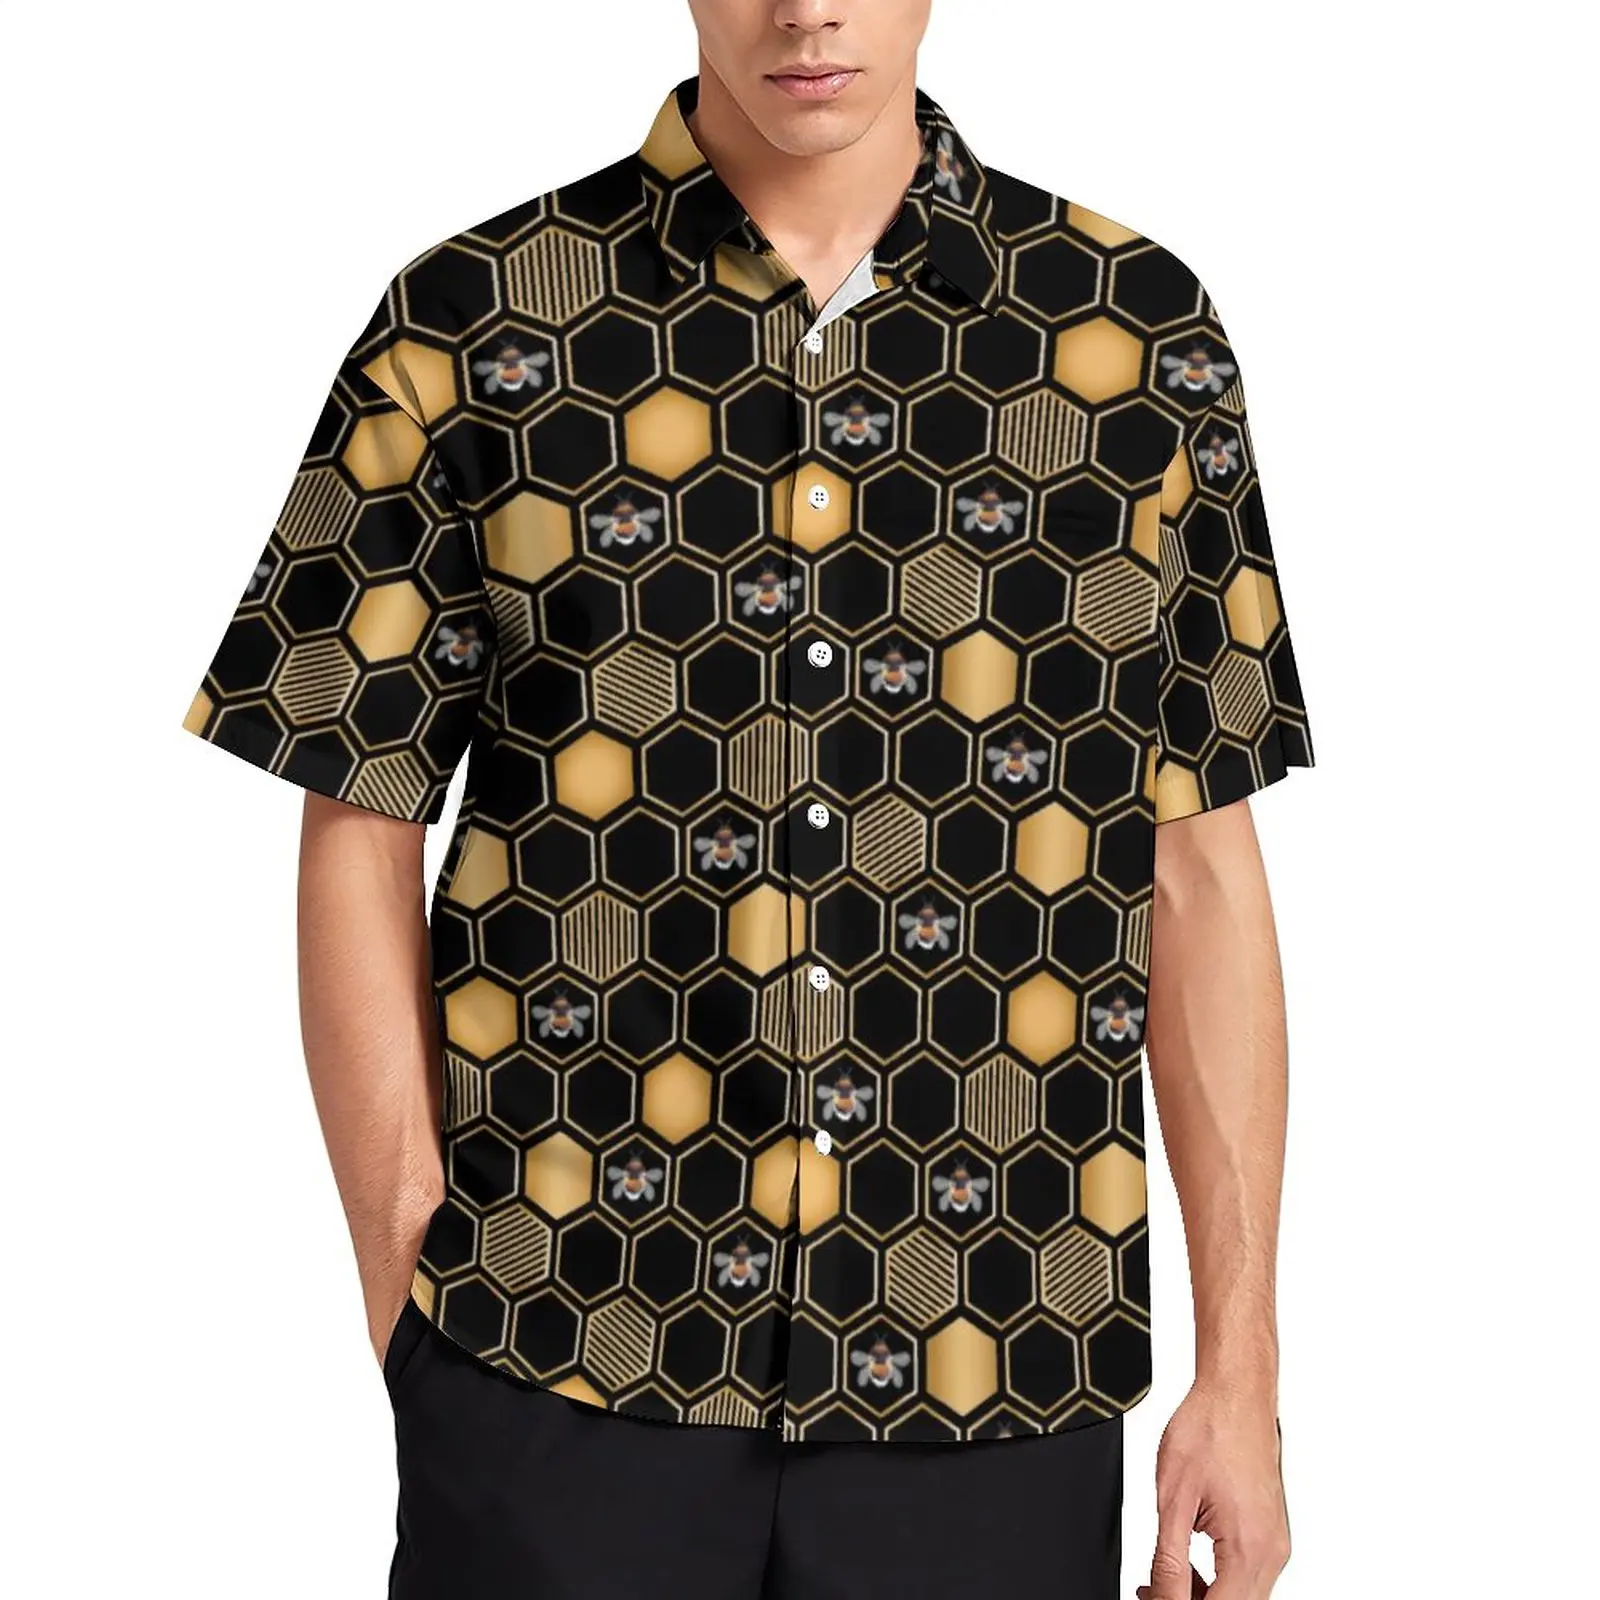 

Bees Print Vacation Shirt Honeycomb Geometric Hawaii Casual Shirts Men Streetwear Blouses Short Sleeve Printed Top Plus Size 4XL